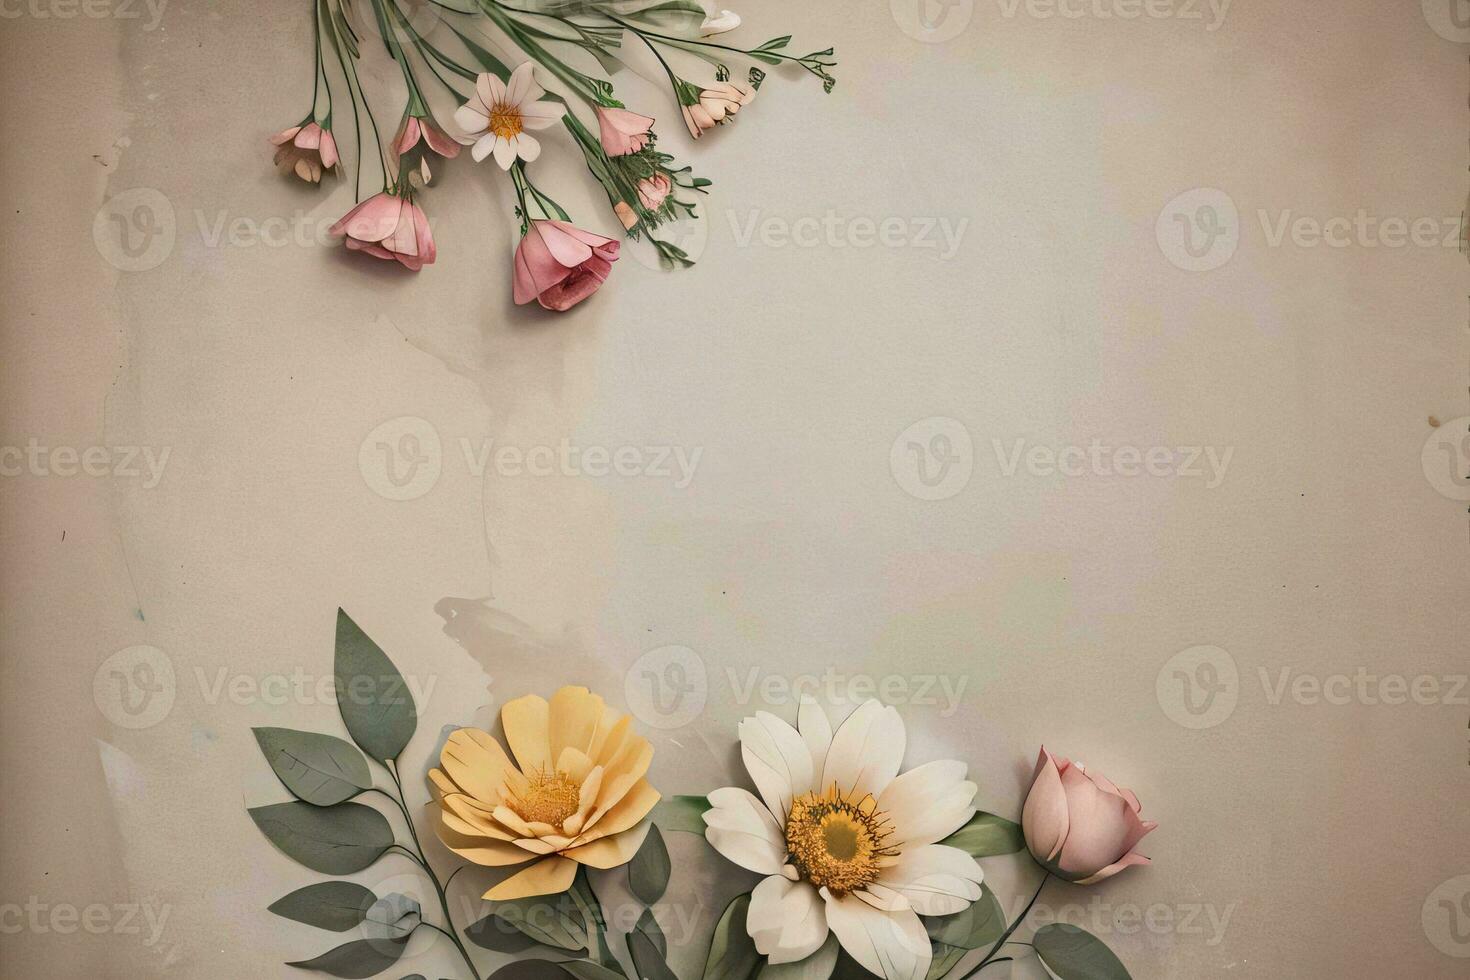 årgång papper med blommor textur bakgrund foto